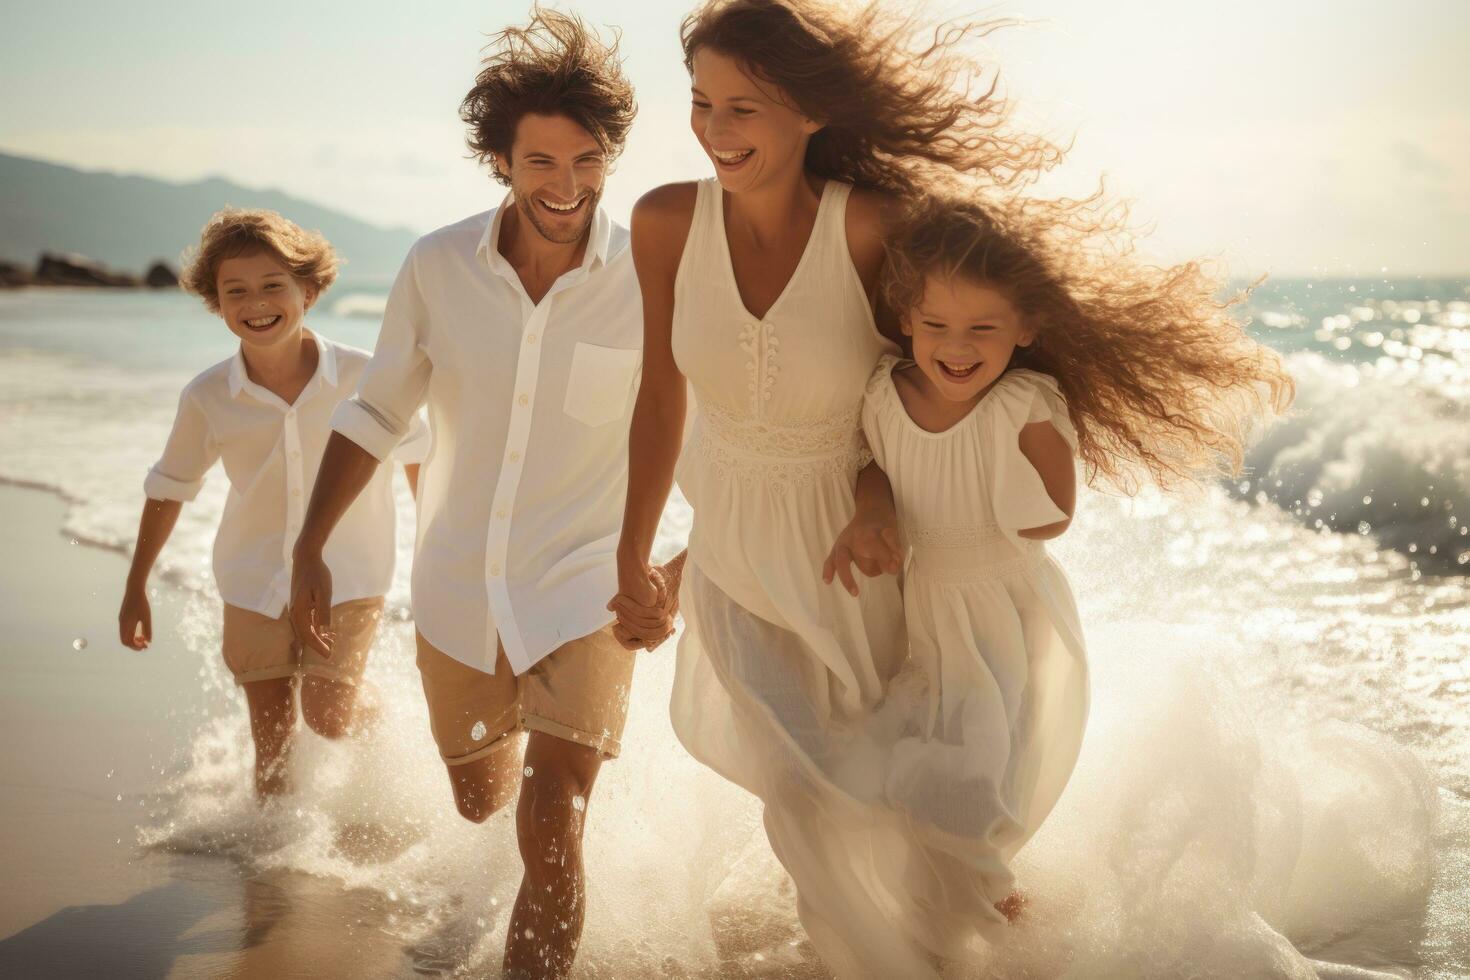 família feliz na praia foto